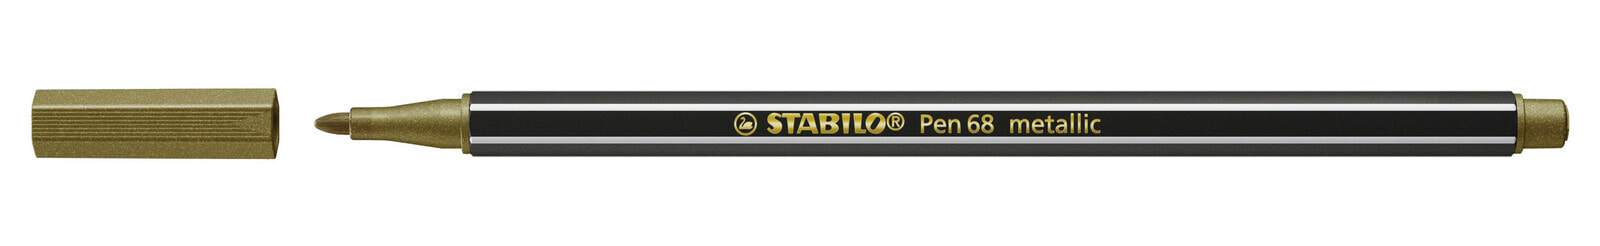 STABILO Pen 68 metallic фломастер Золото 1 шт 68/810